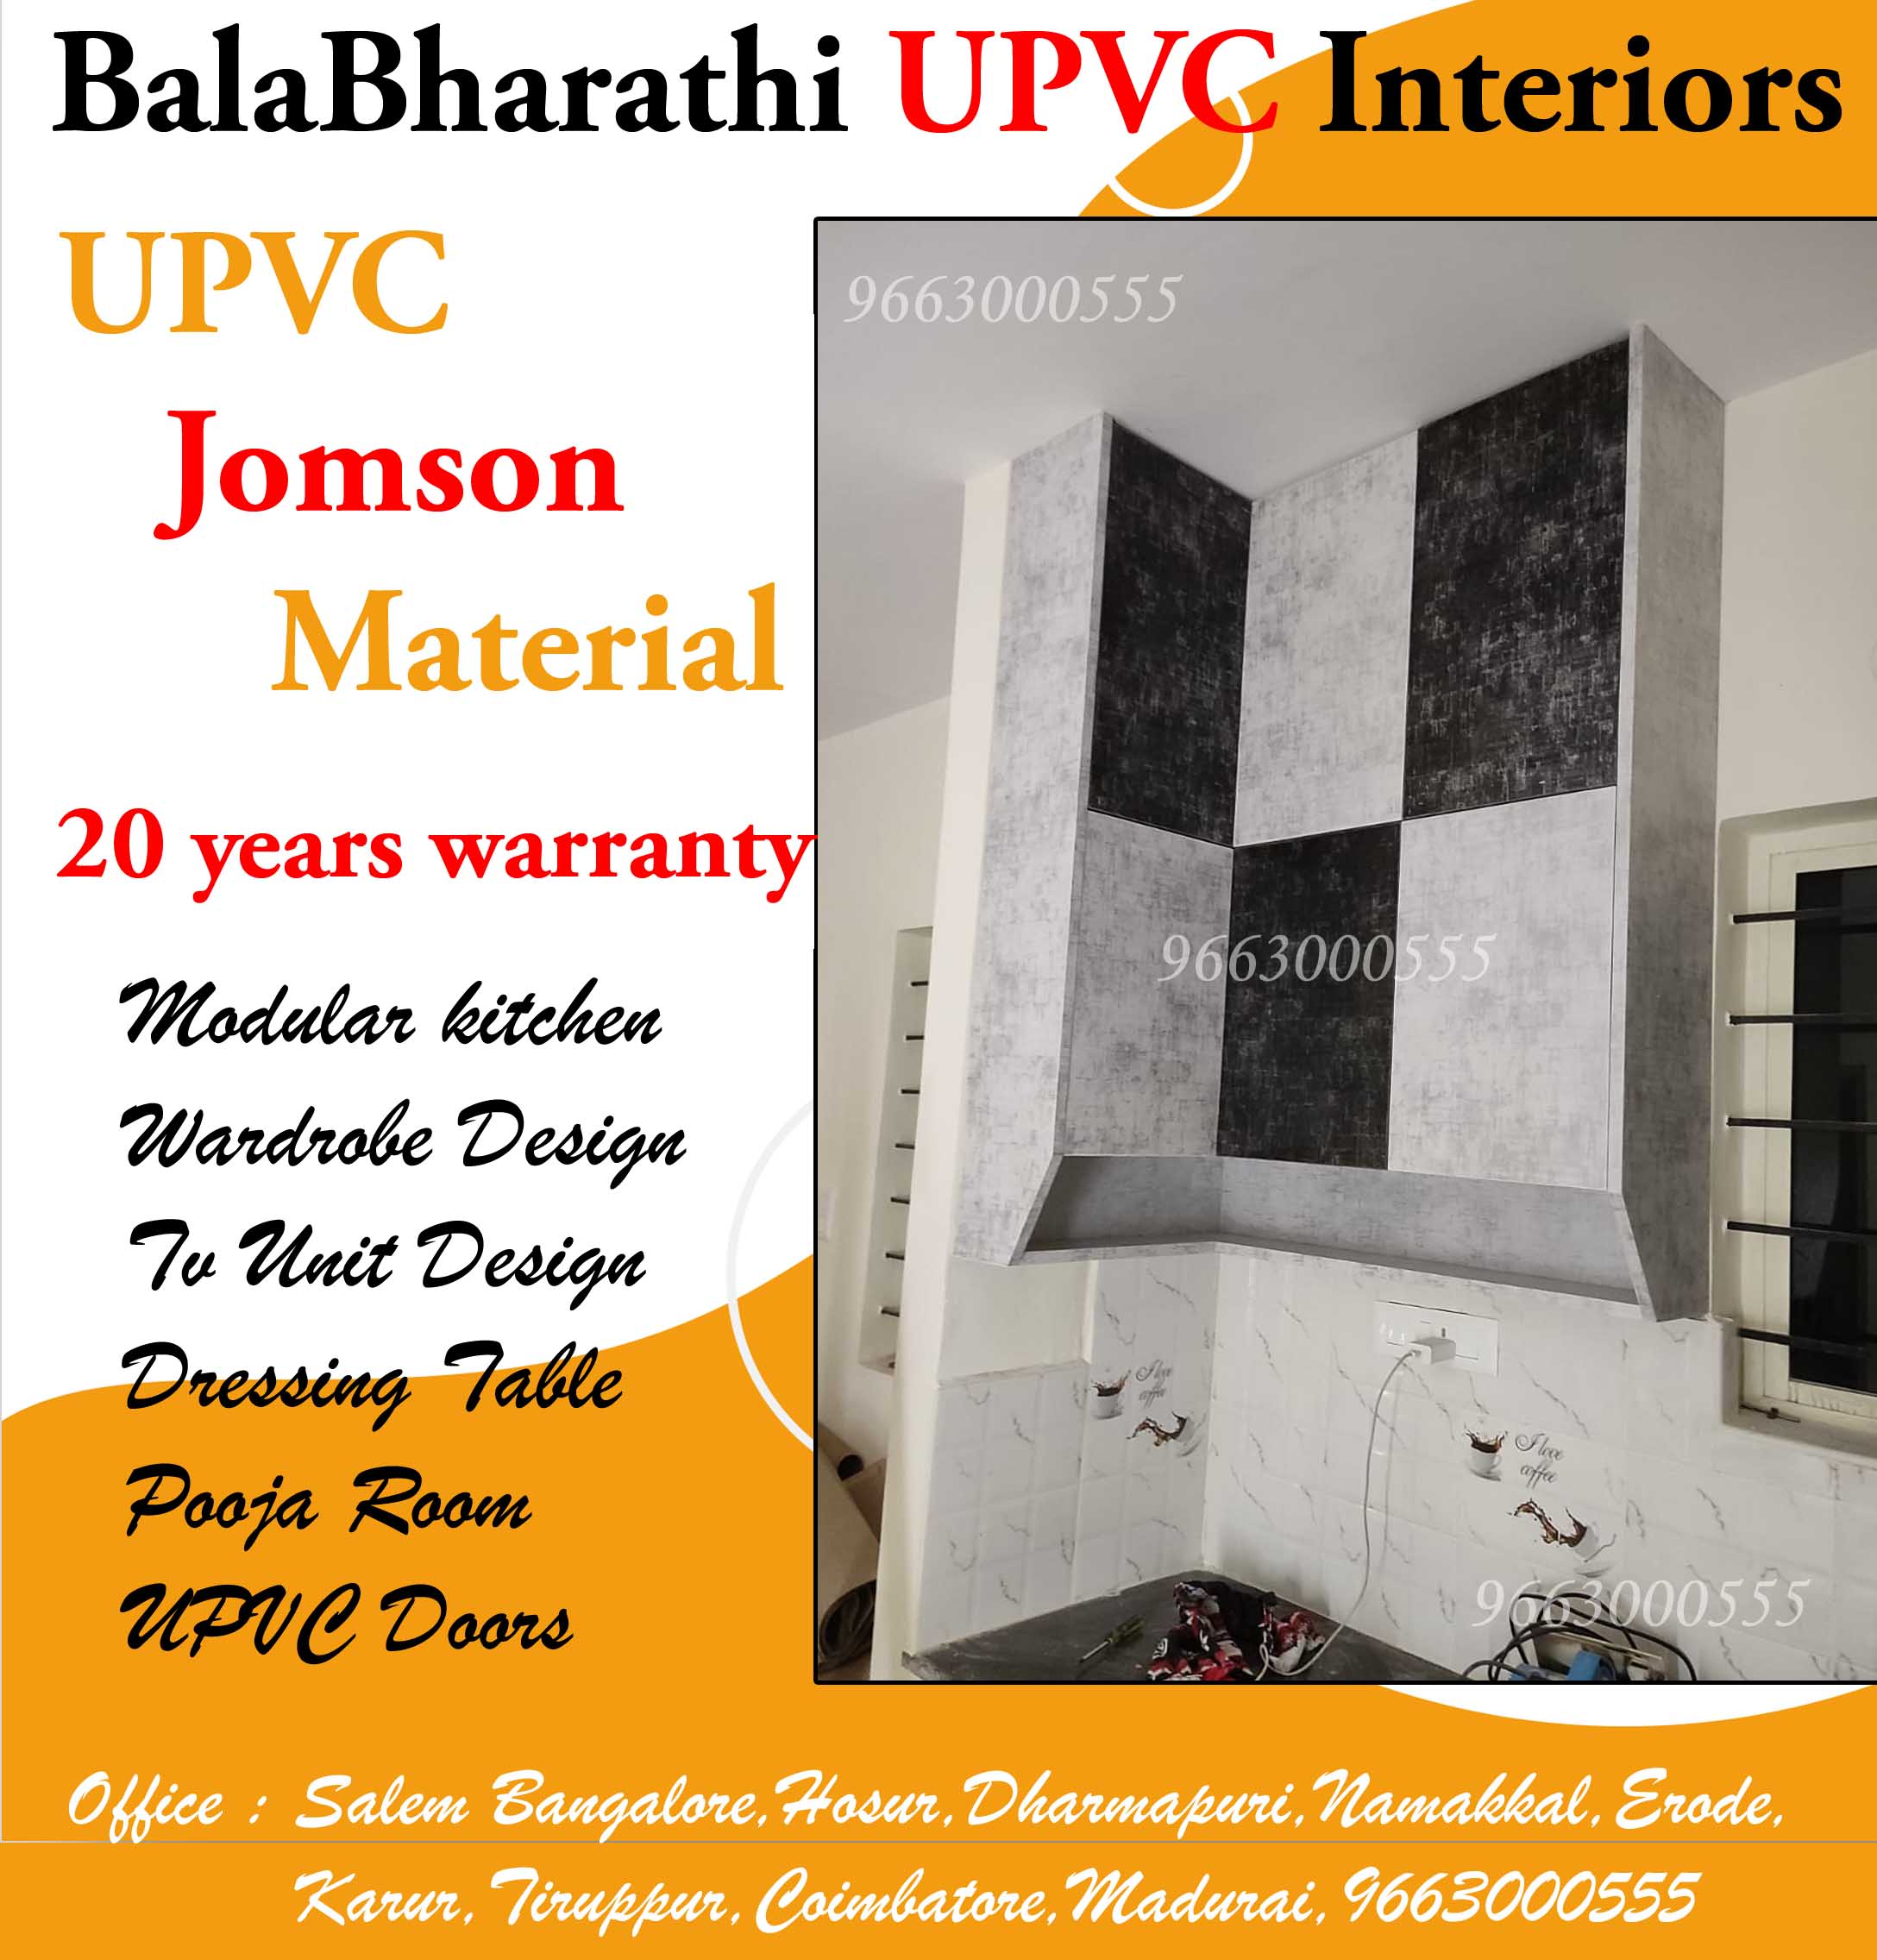 upvc interiors work